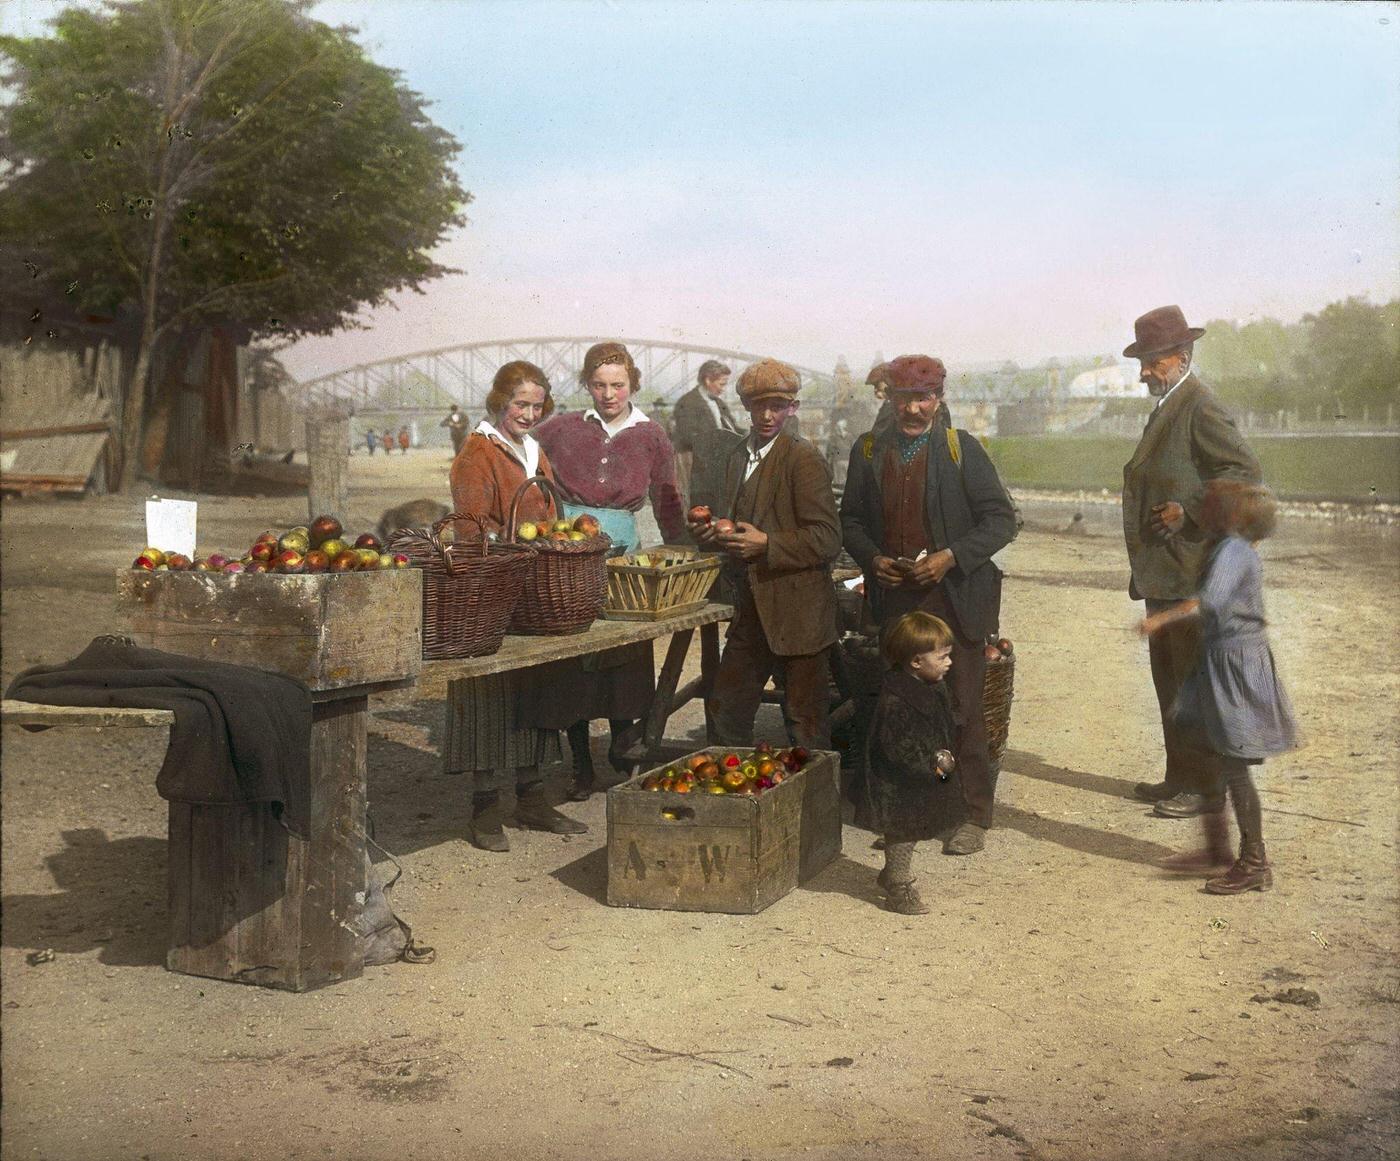 Fruit market at the Nussdorfer Laende. Vienna, 1905.